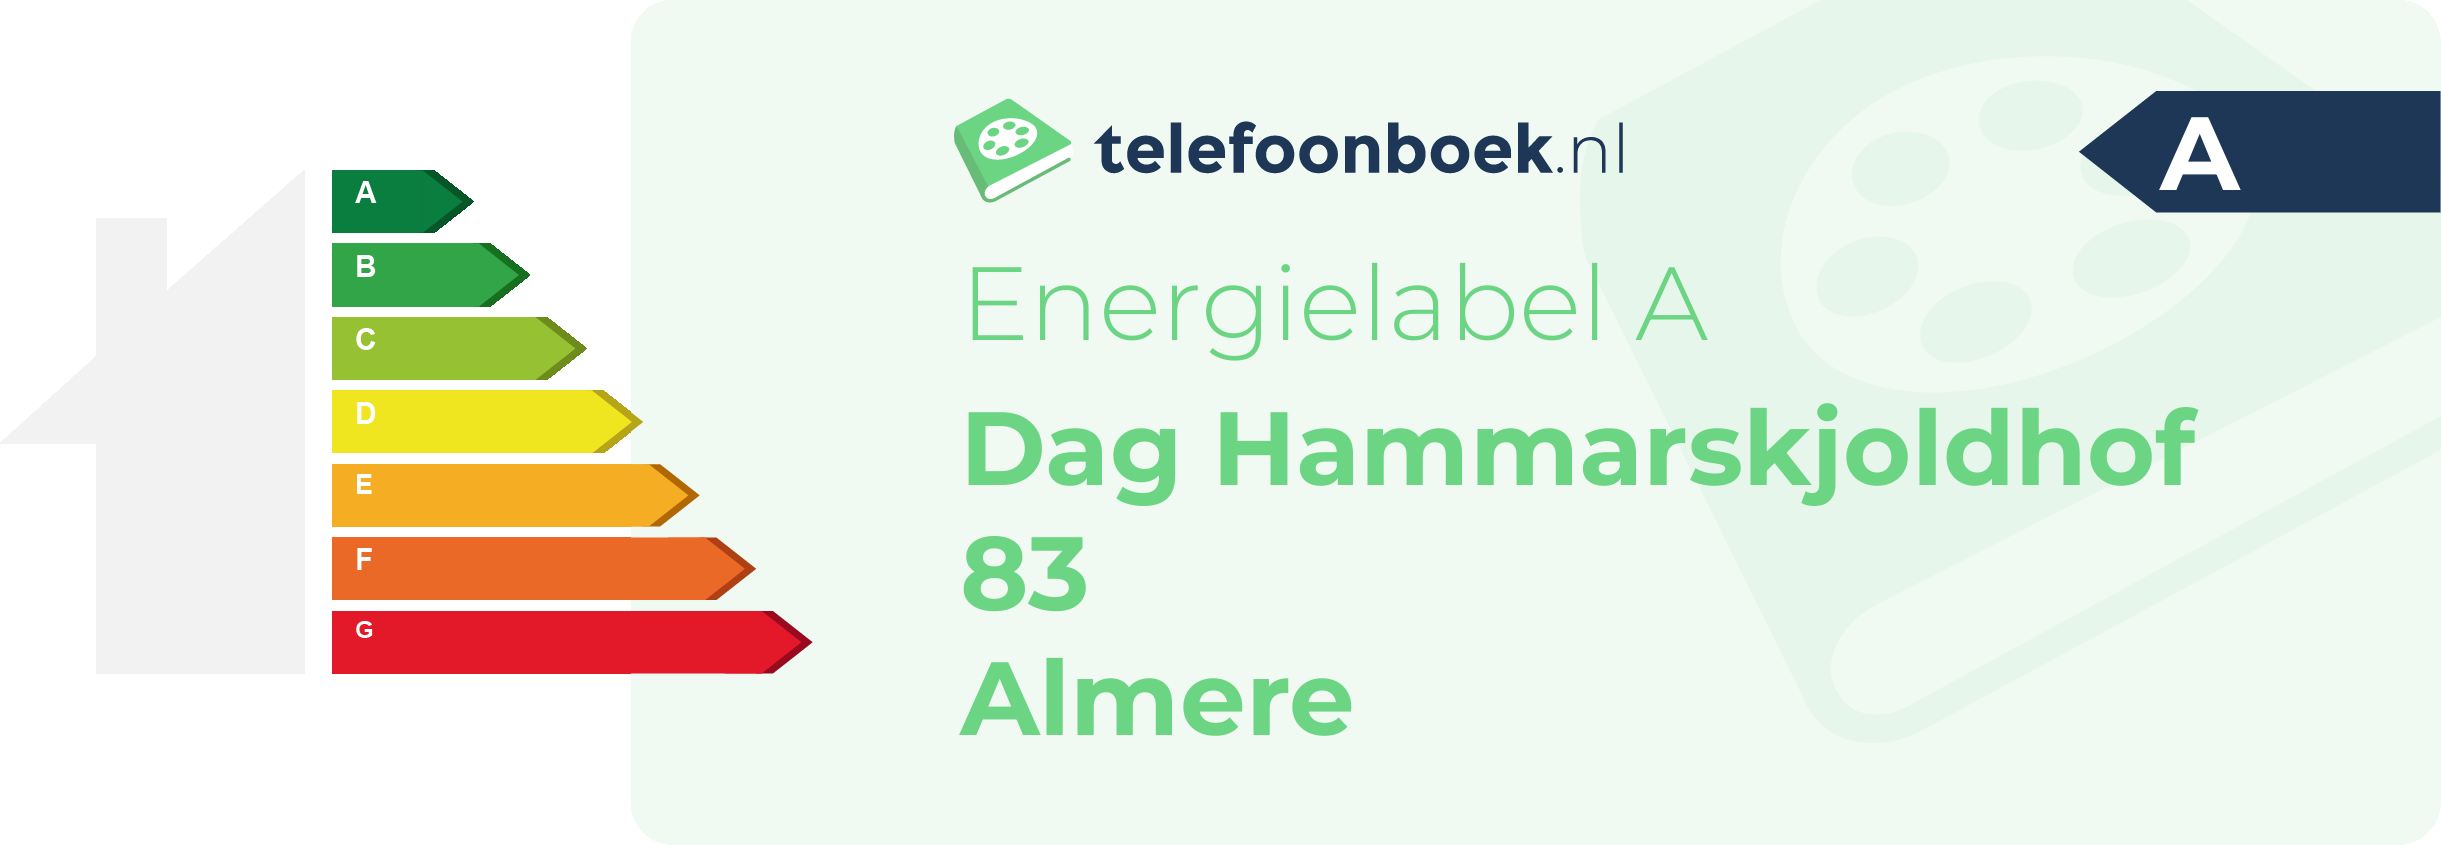 Energielabel Dag Hammarskjoldhof 83 Almere